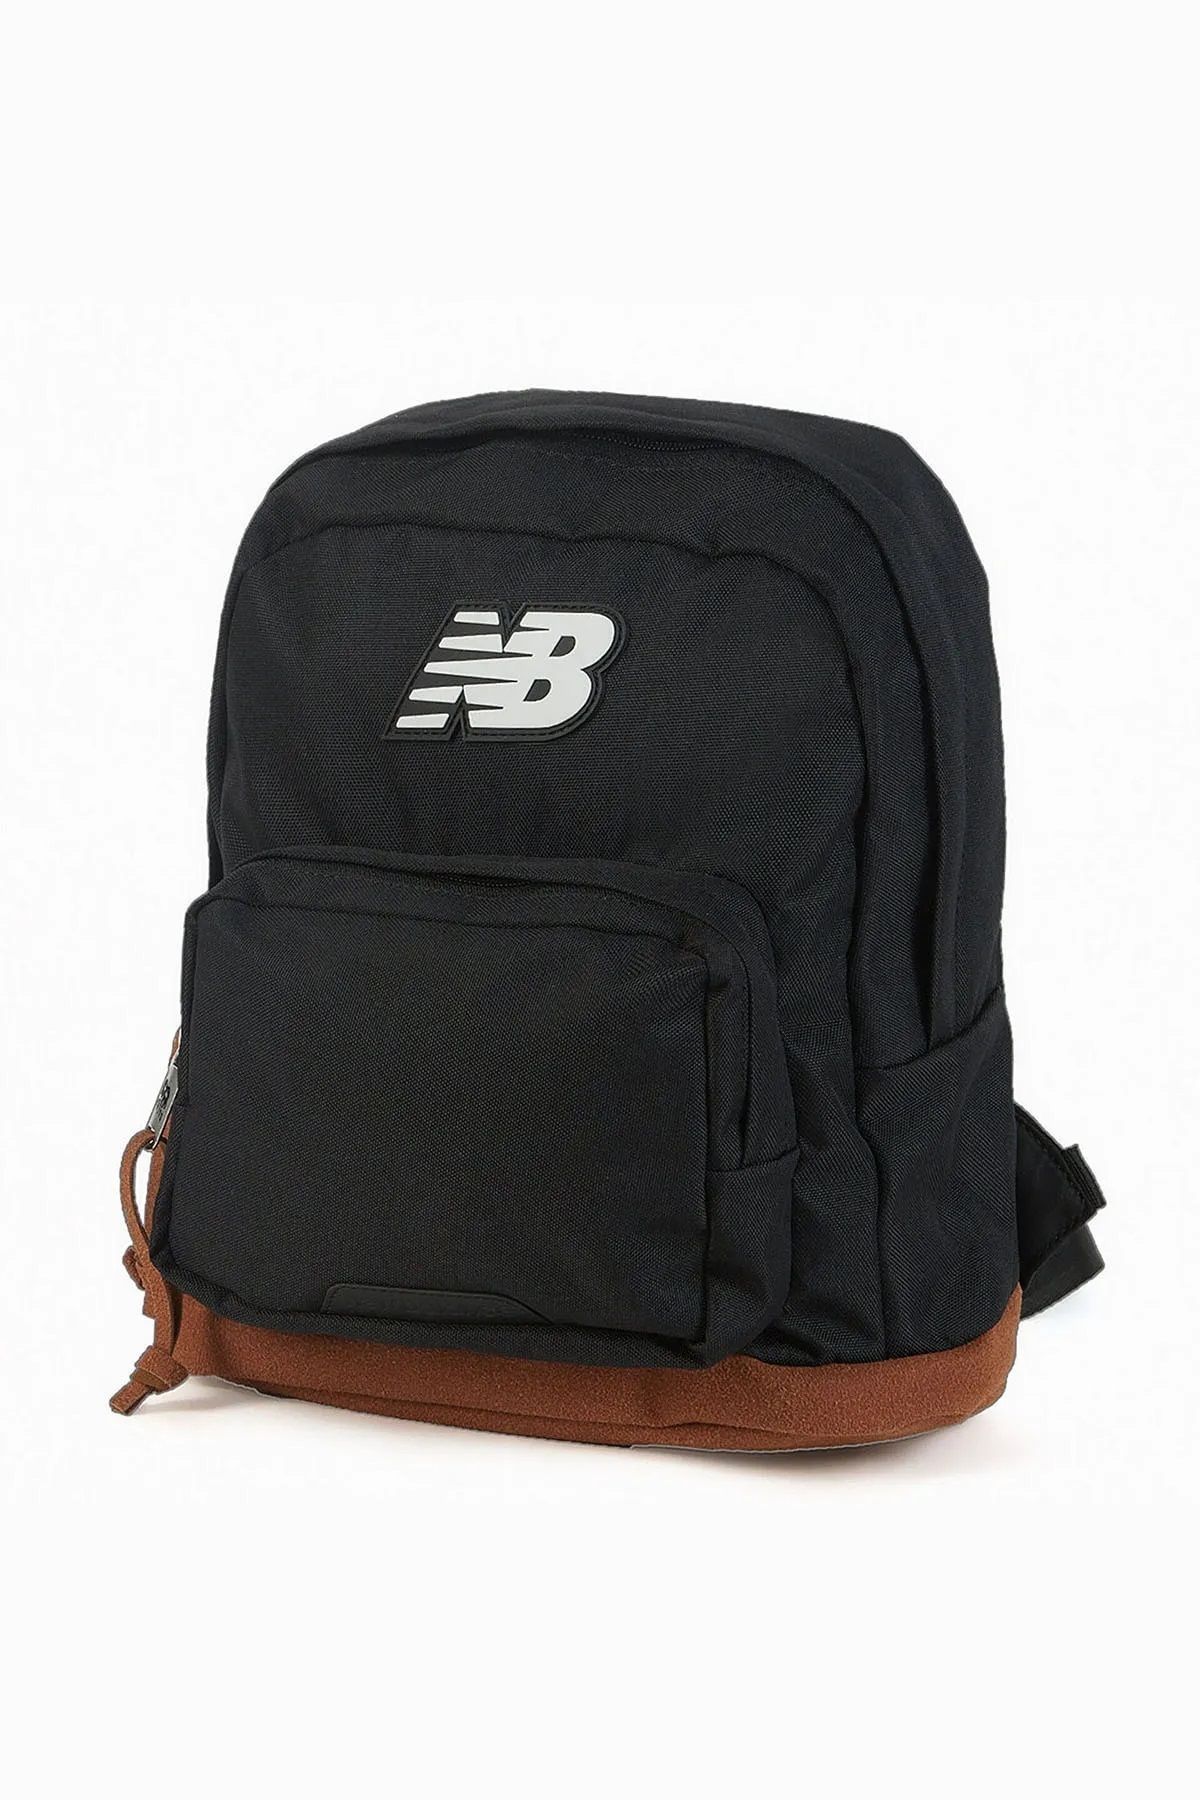 New Balance Çanta Nb Mini Backpack Anb3201-wt  MİNİ BOY COCUK GALİP BABA